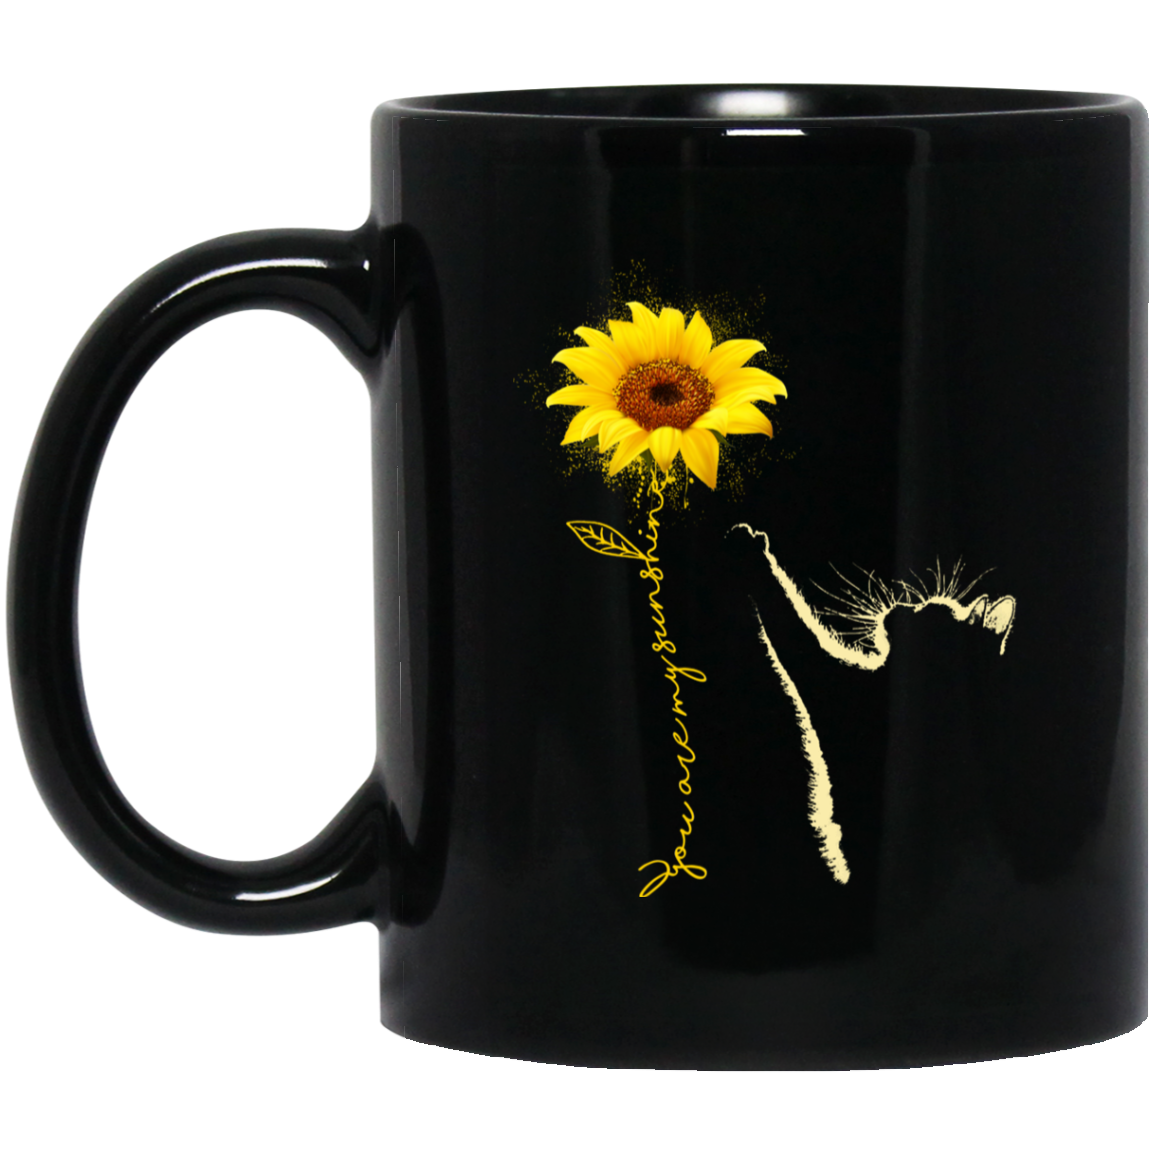 You're My Sunshine - Cat Black Mug